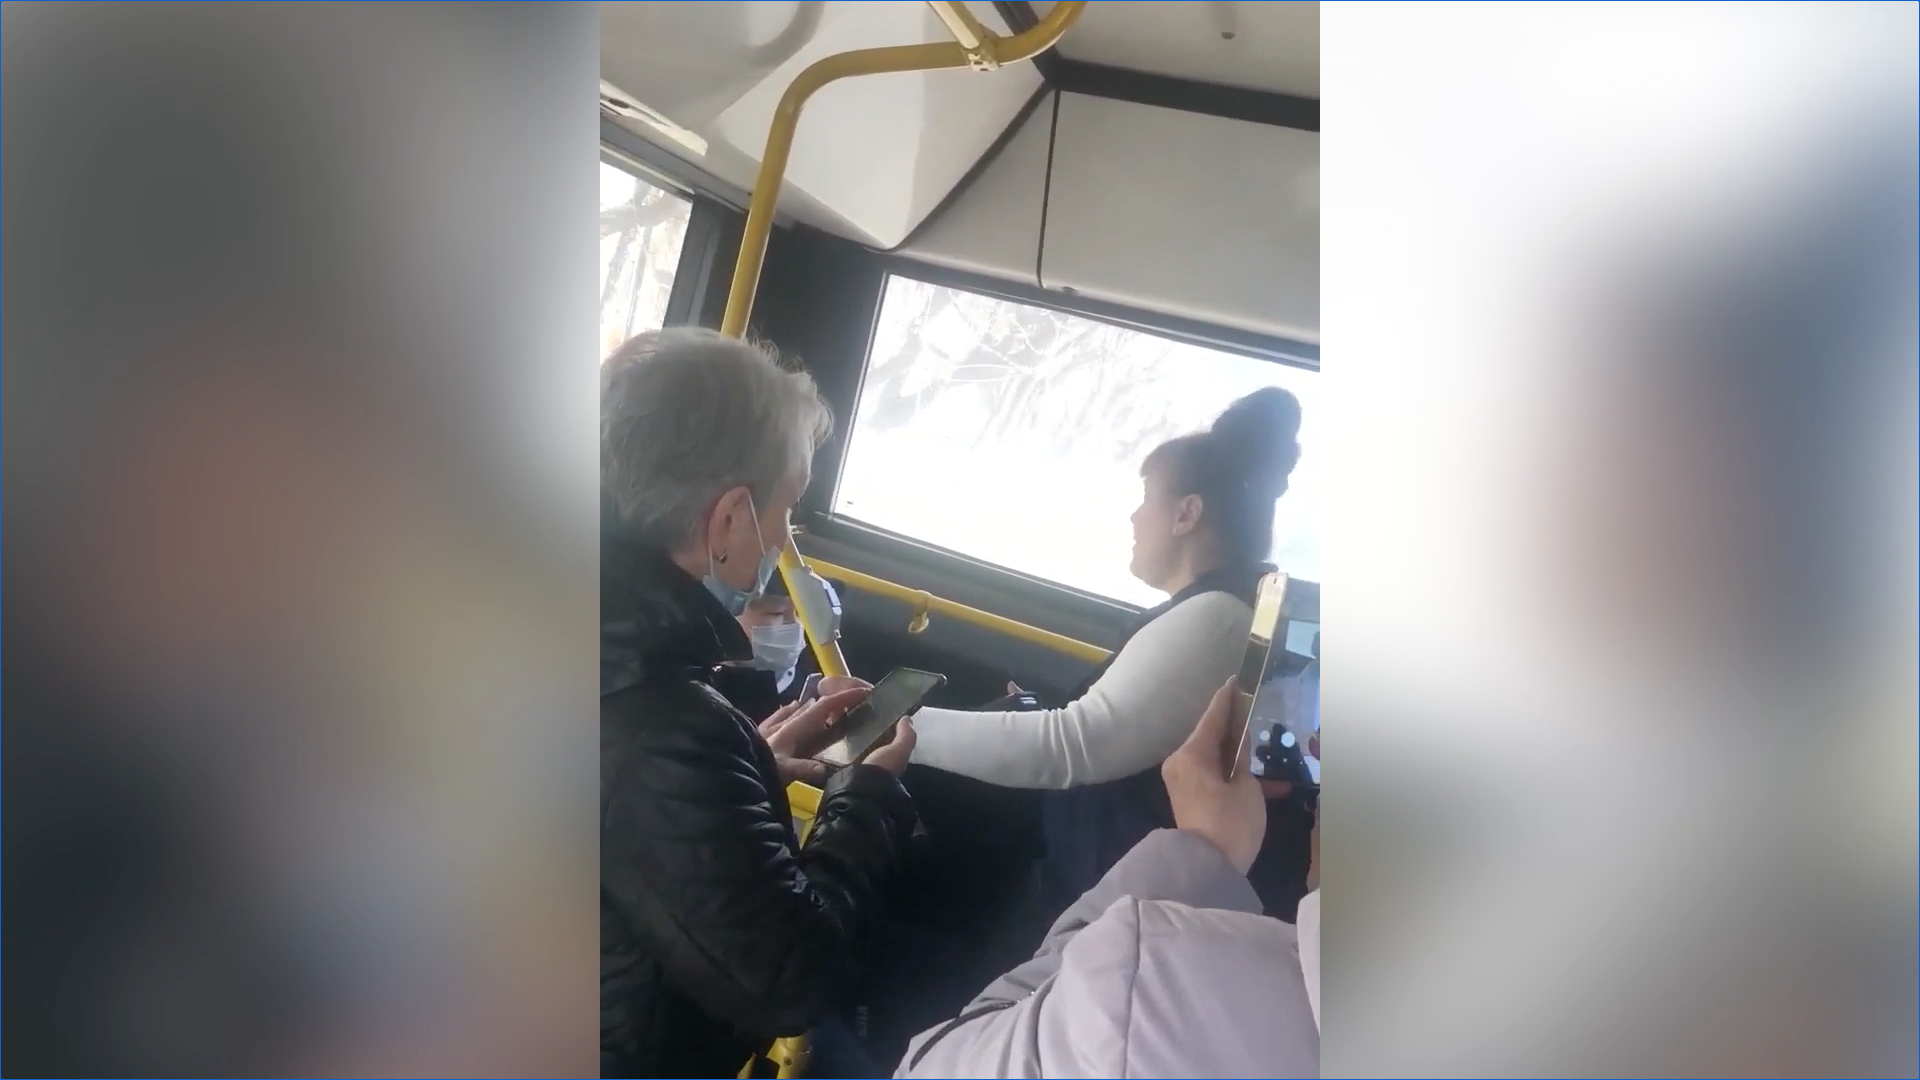 "Я знаю свои правила!": В Тюмени кондуктор обматерила школьника за самокат в салоне автобуса